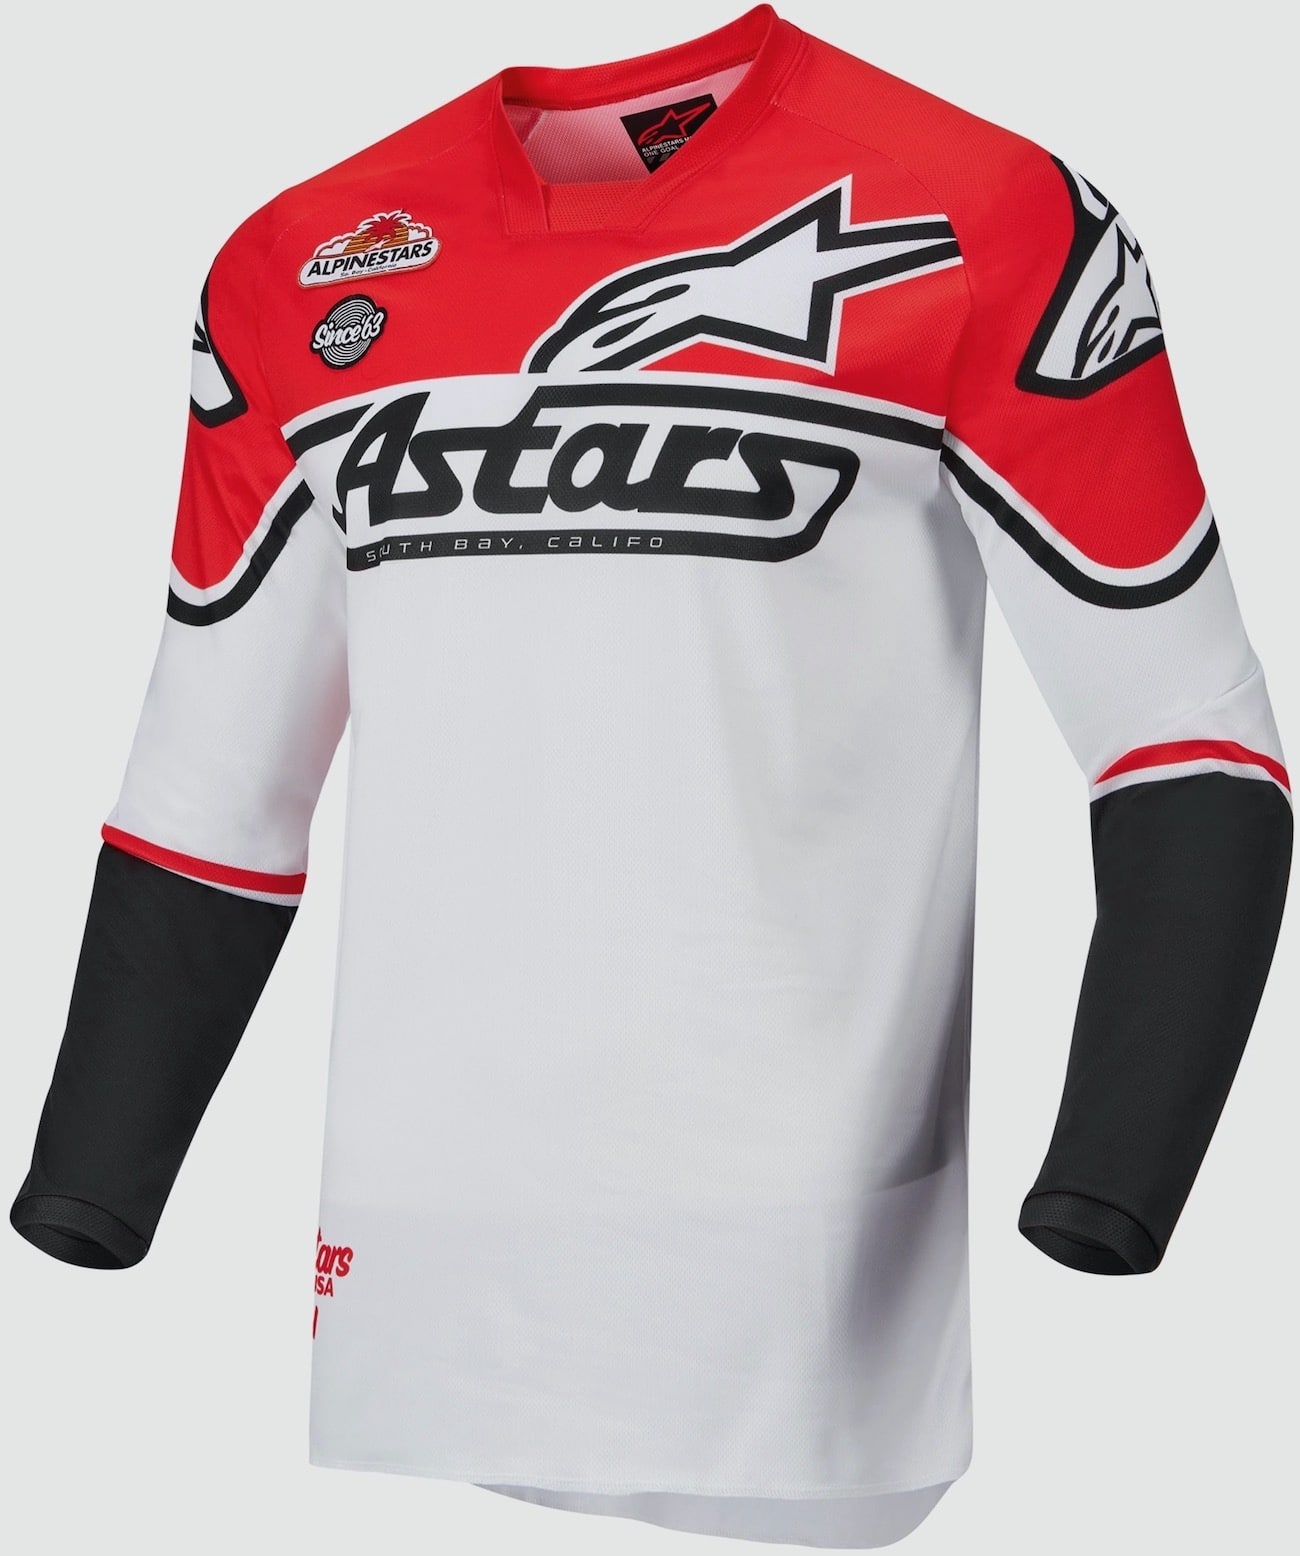 2019 Alpinestars Racer Braap mx motocross Cross Jersey maroon Shirt BMX MTB 